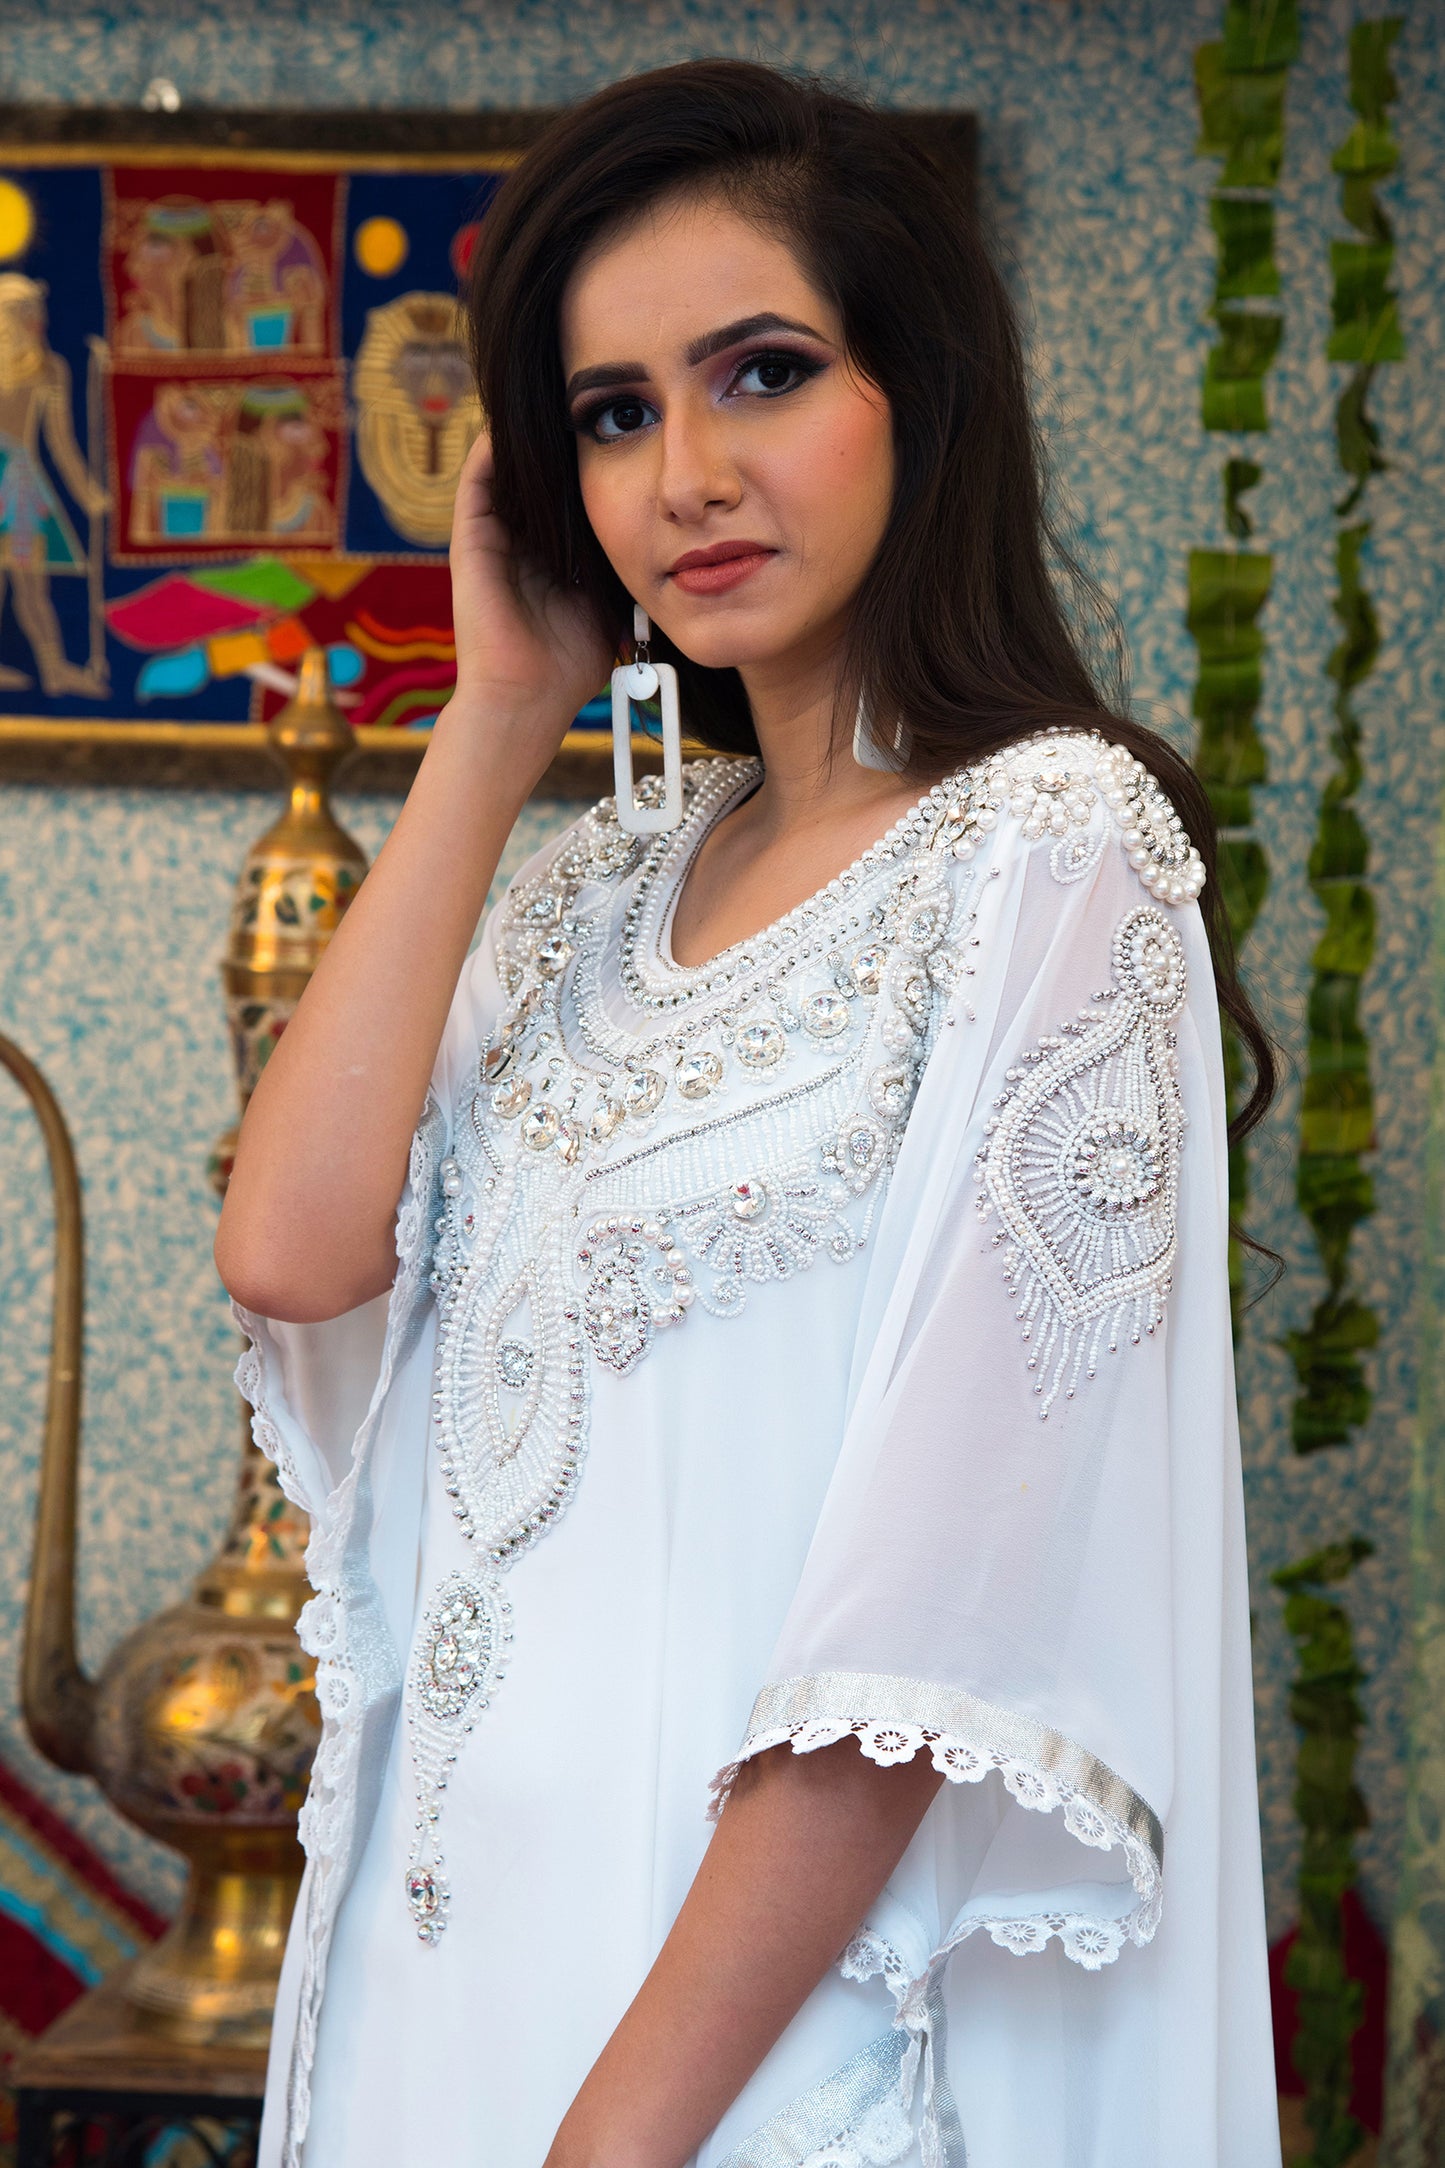 White Color Trendy Abaya Dress